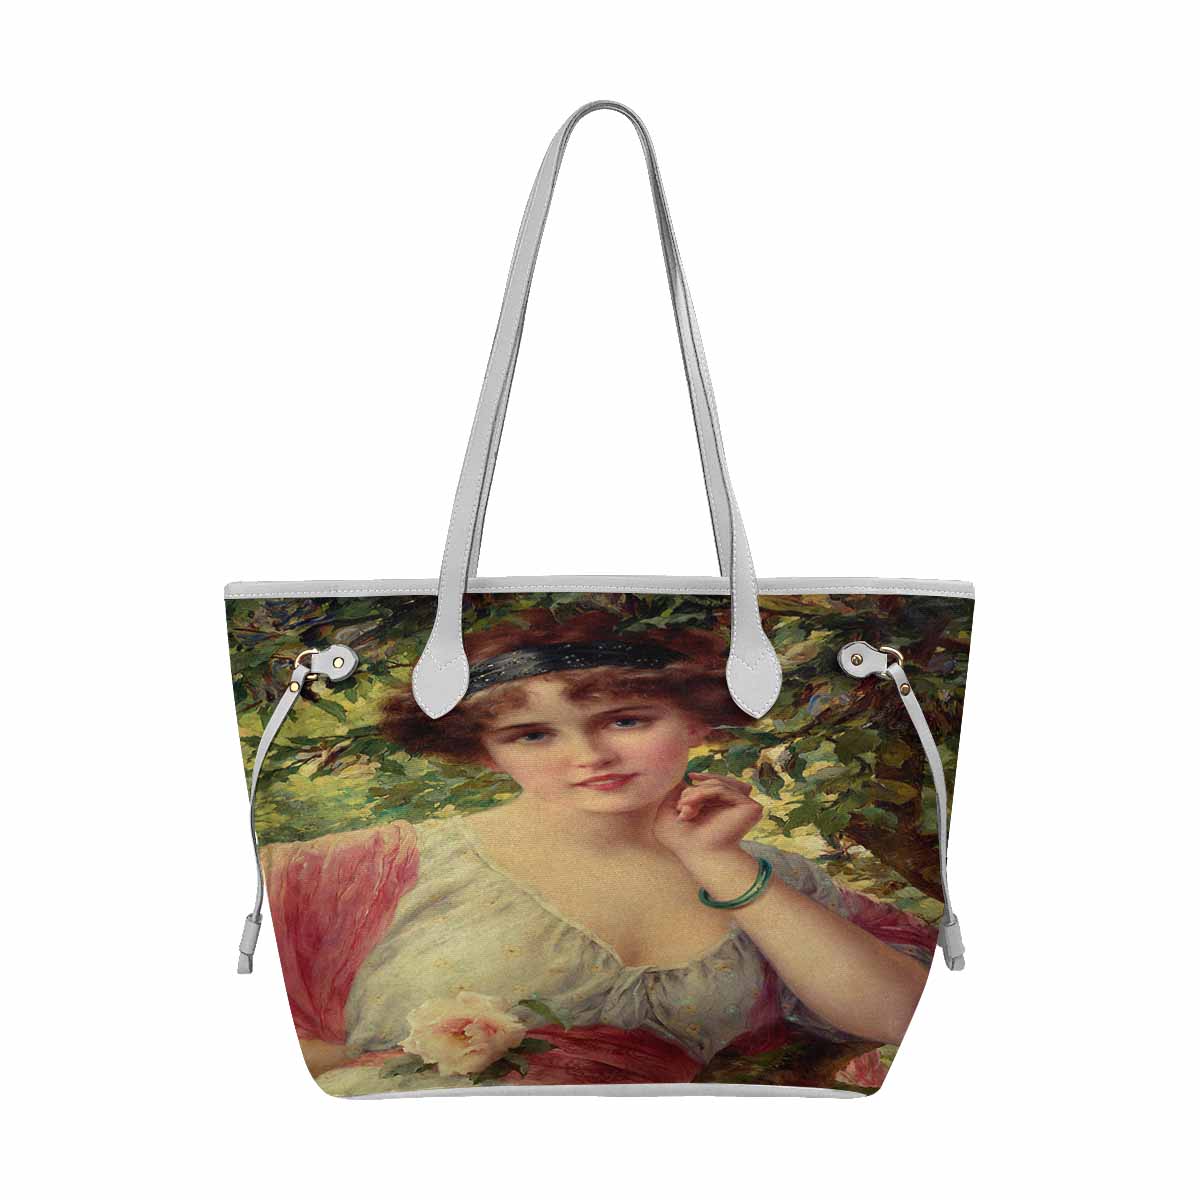 Victorian Lady Design Handbag, Model 1695361, A Summer Rose, WHITE TRIM